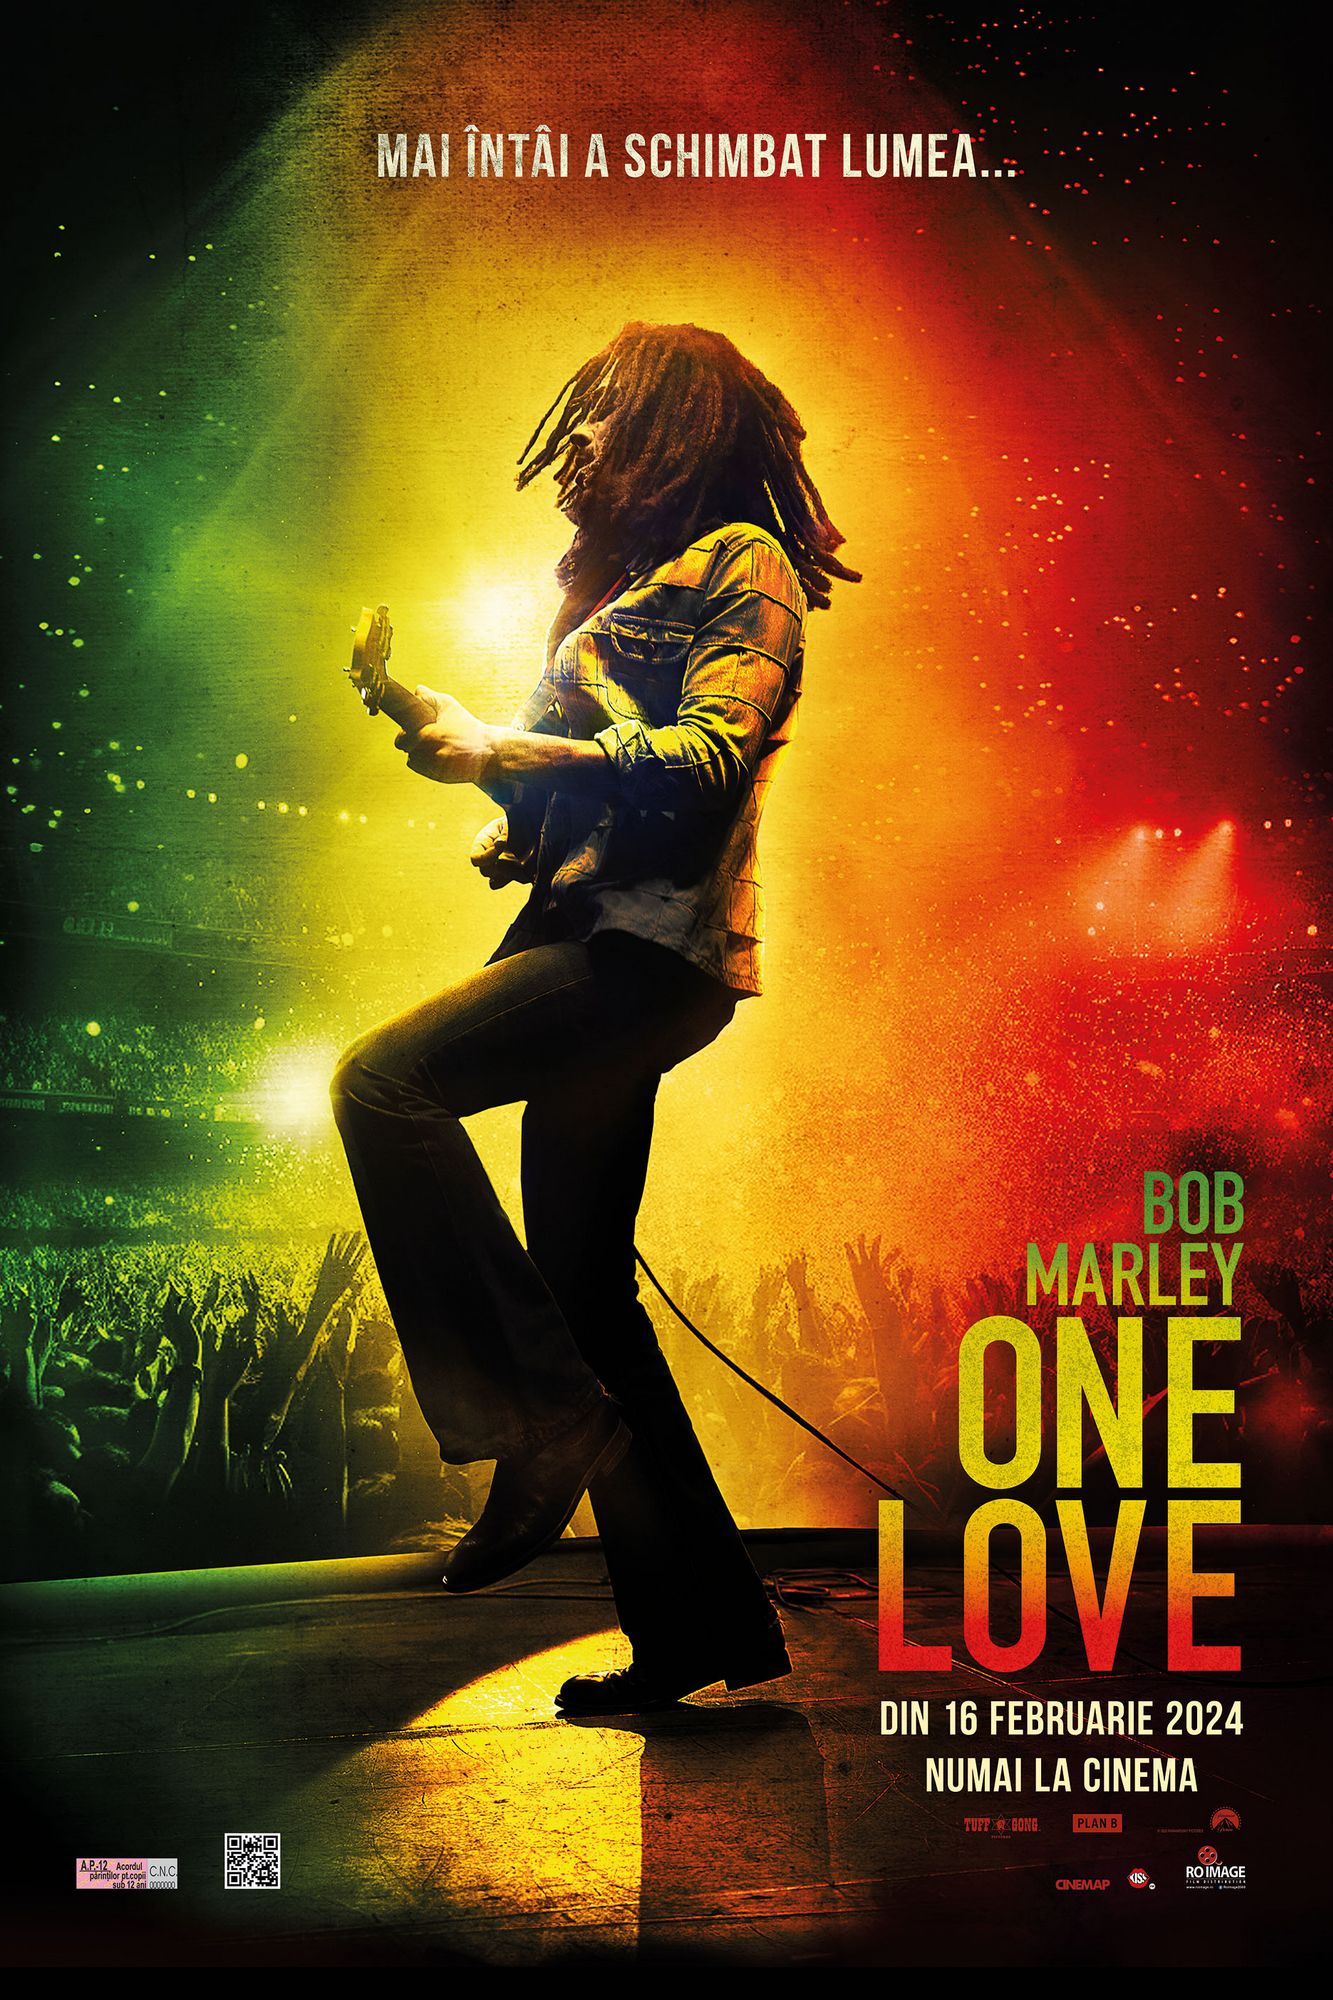 Bob Marley One Love POSTER ROMANIA